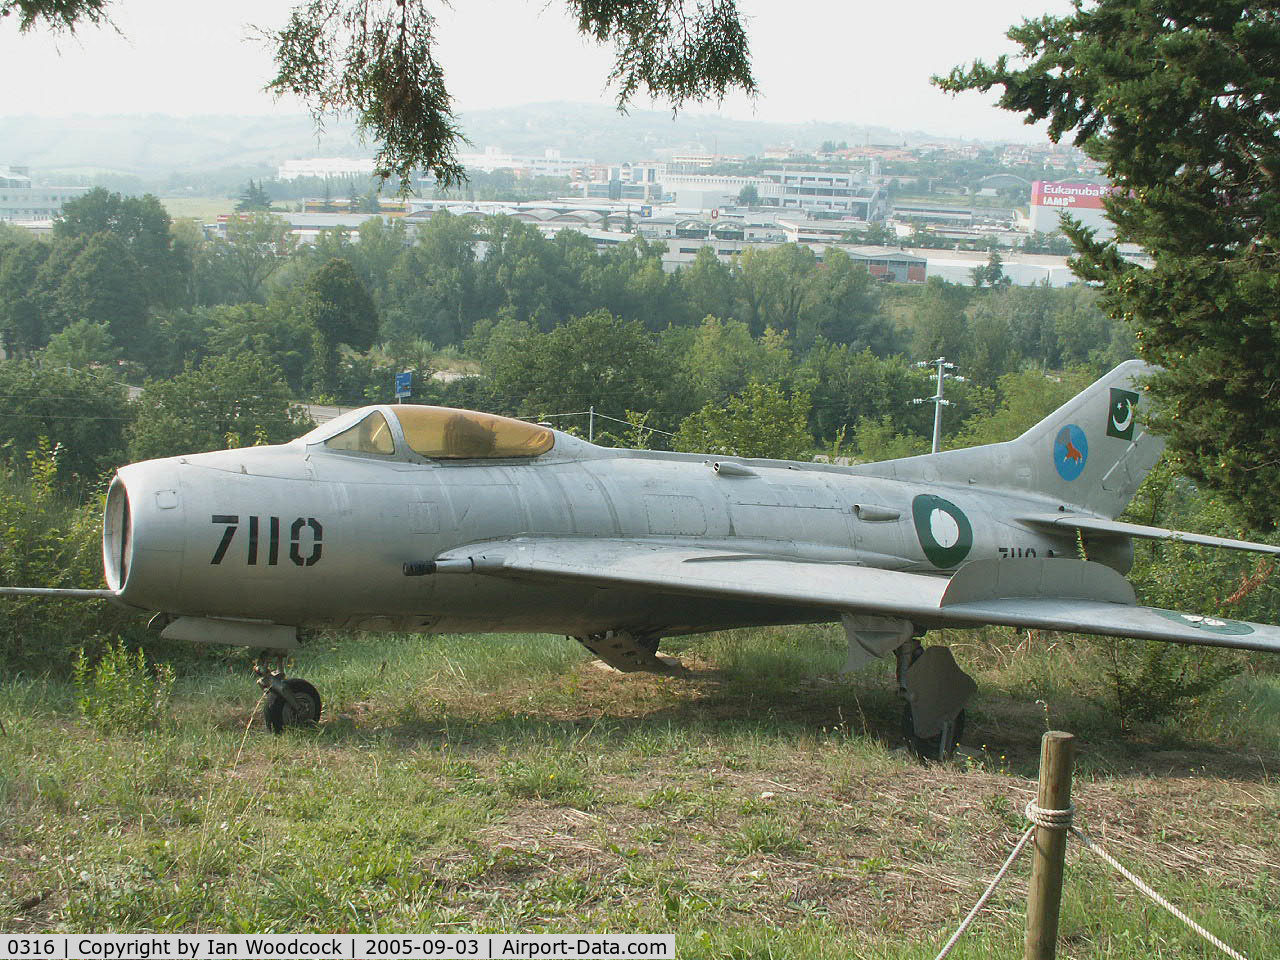 0316, Mikoyan-Gurevich MiG-19S C/N 150316, Mikoyan-Gurevich MiG-19S/Preserved/Cerbaiola,Emilia-Romagna (in Pakistani Marks 7110)